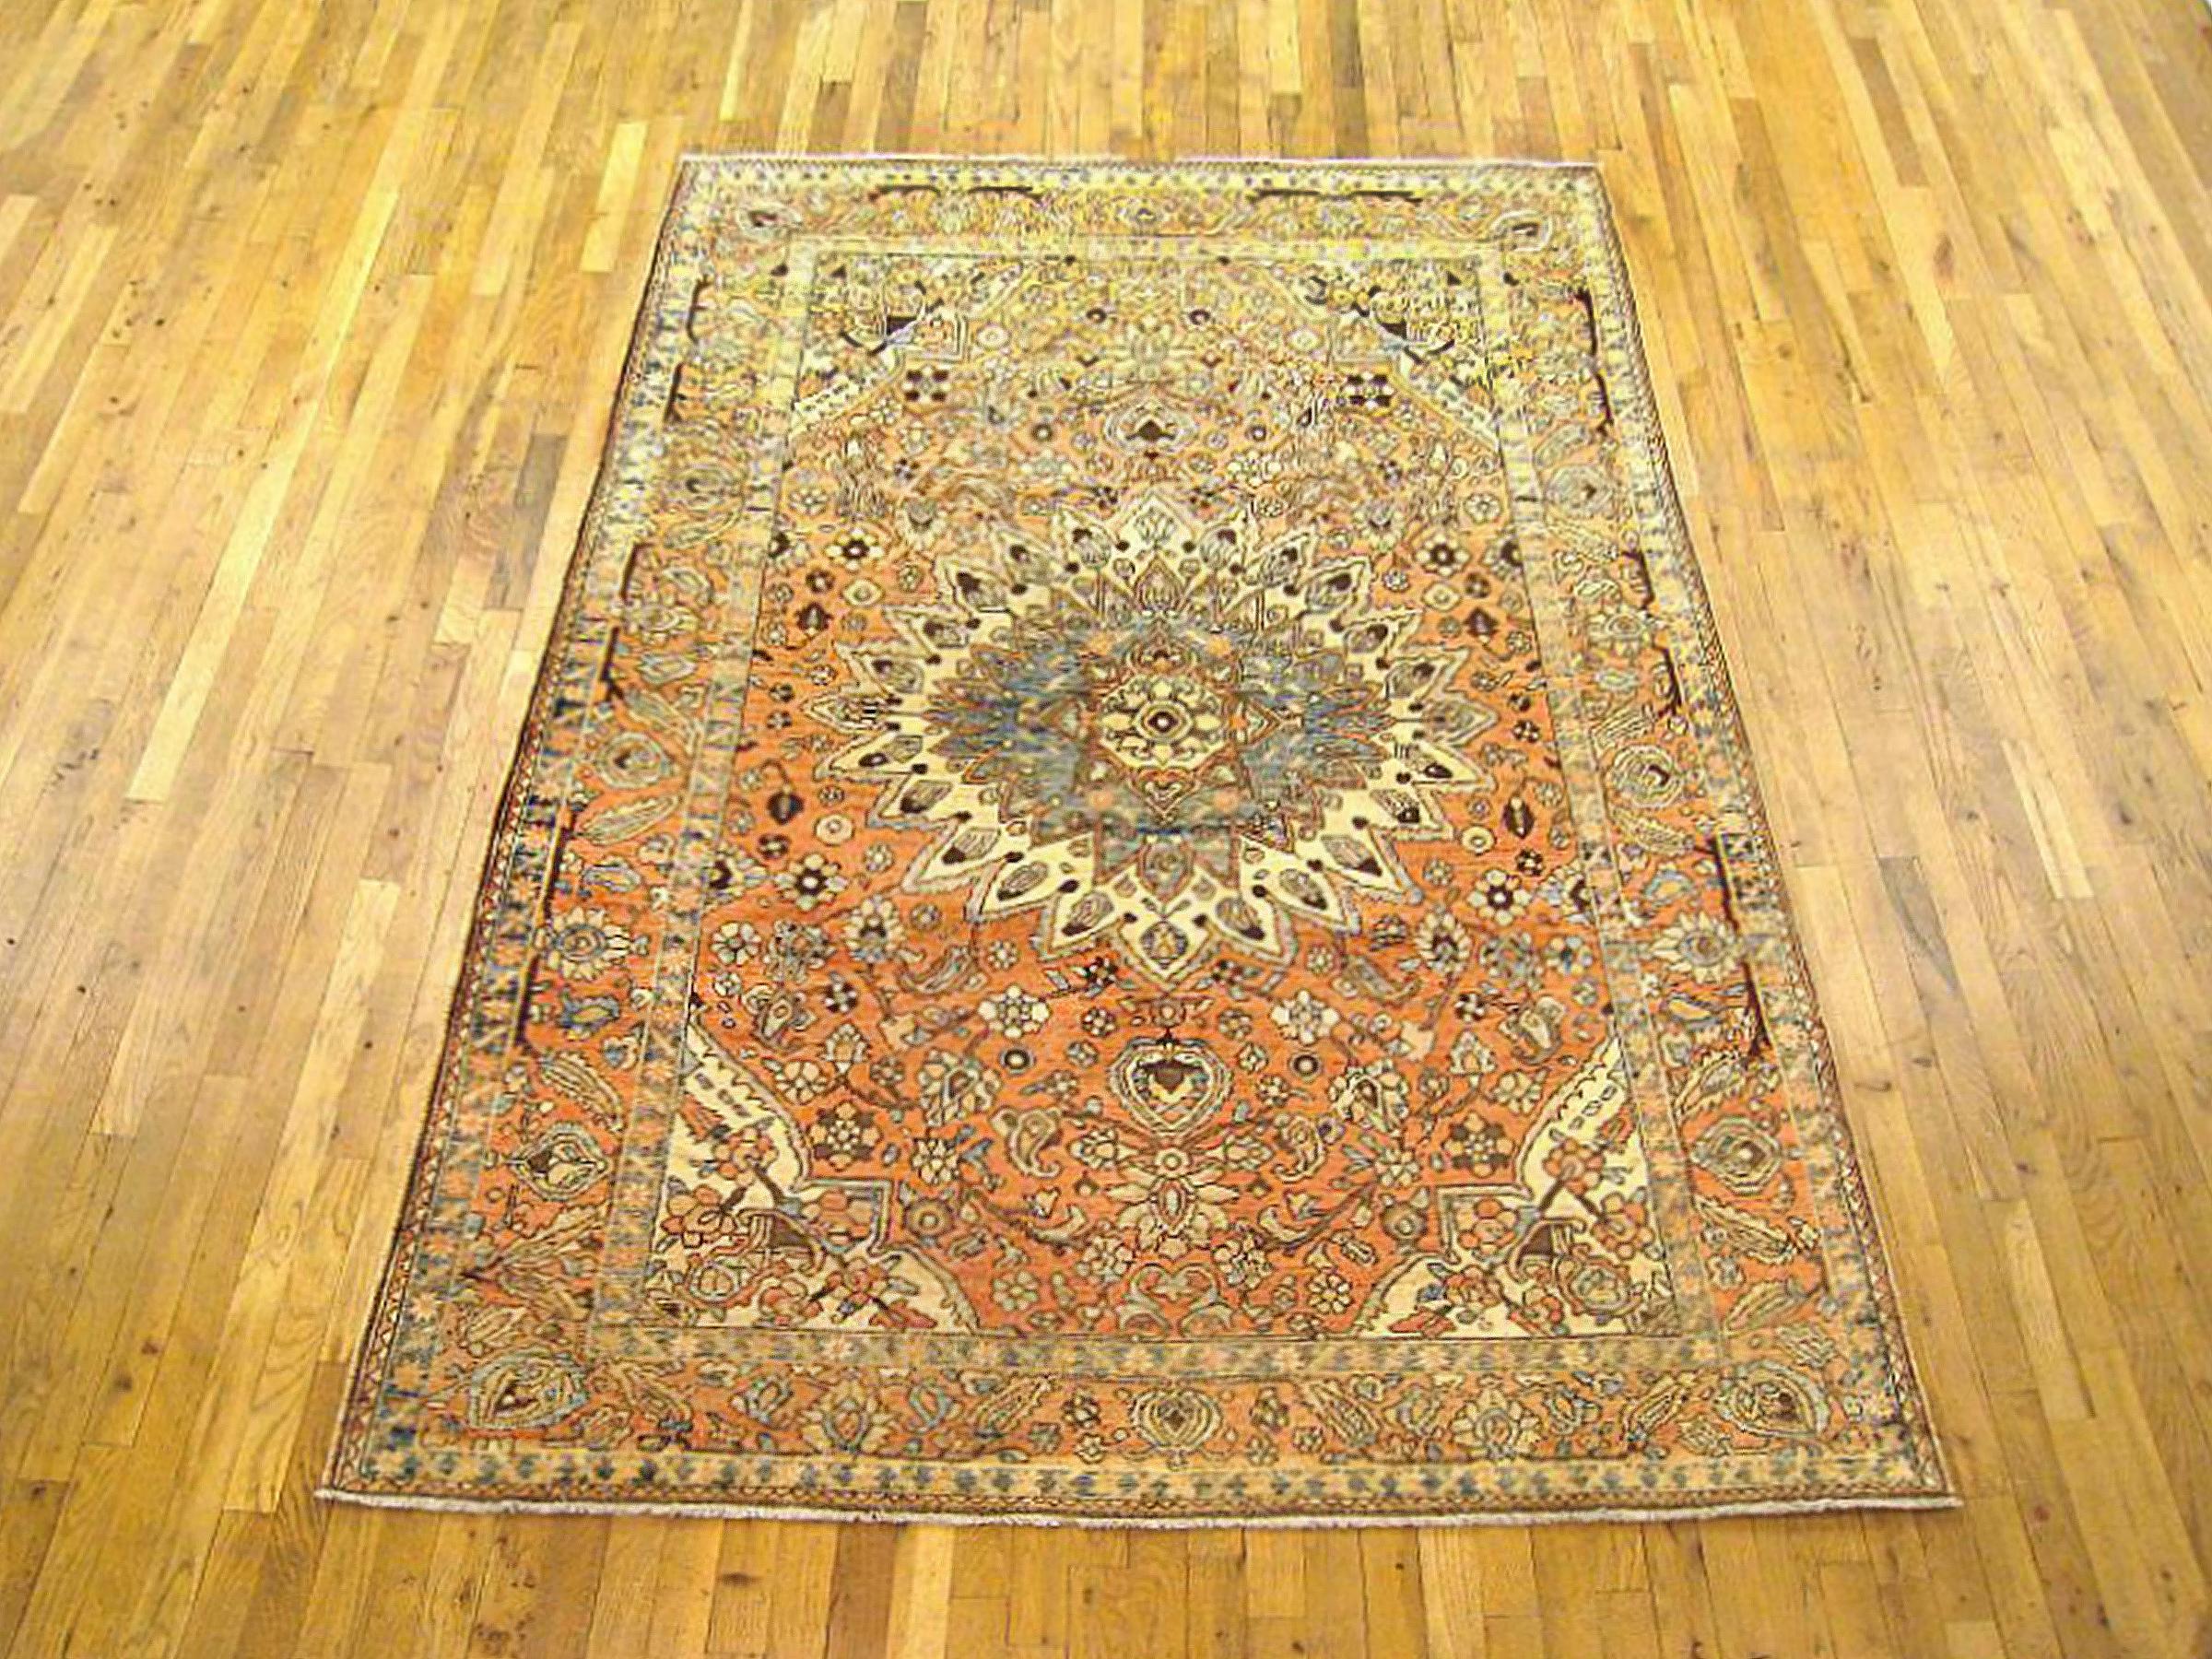 Vintage Persian Baktiari Oriental rug, Small size

A vintage Baktiari oriental rug, size 8'2